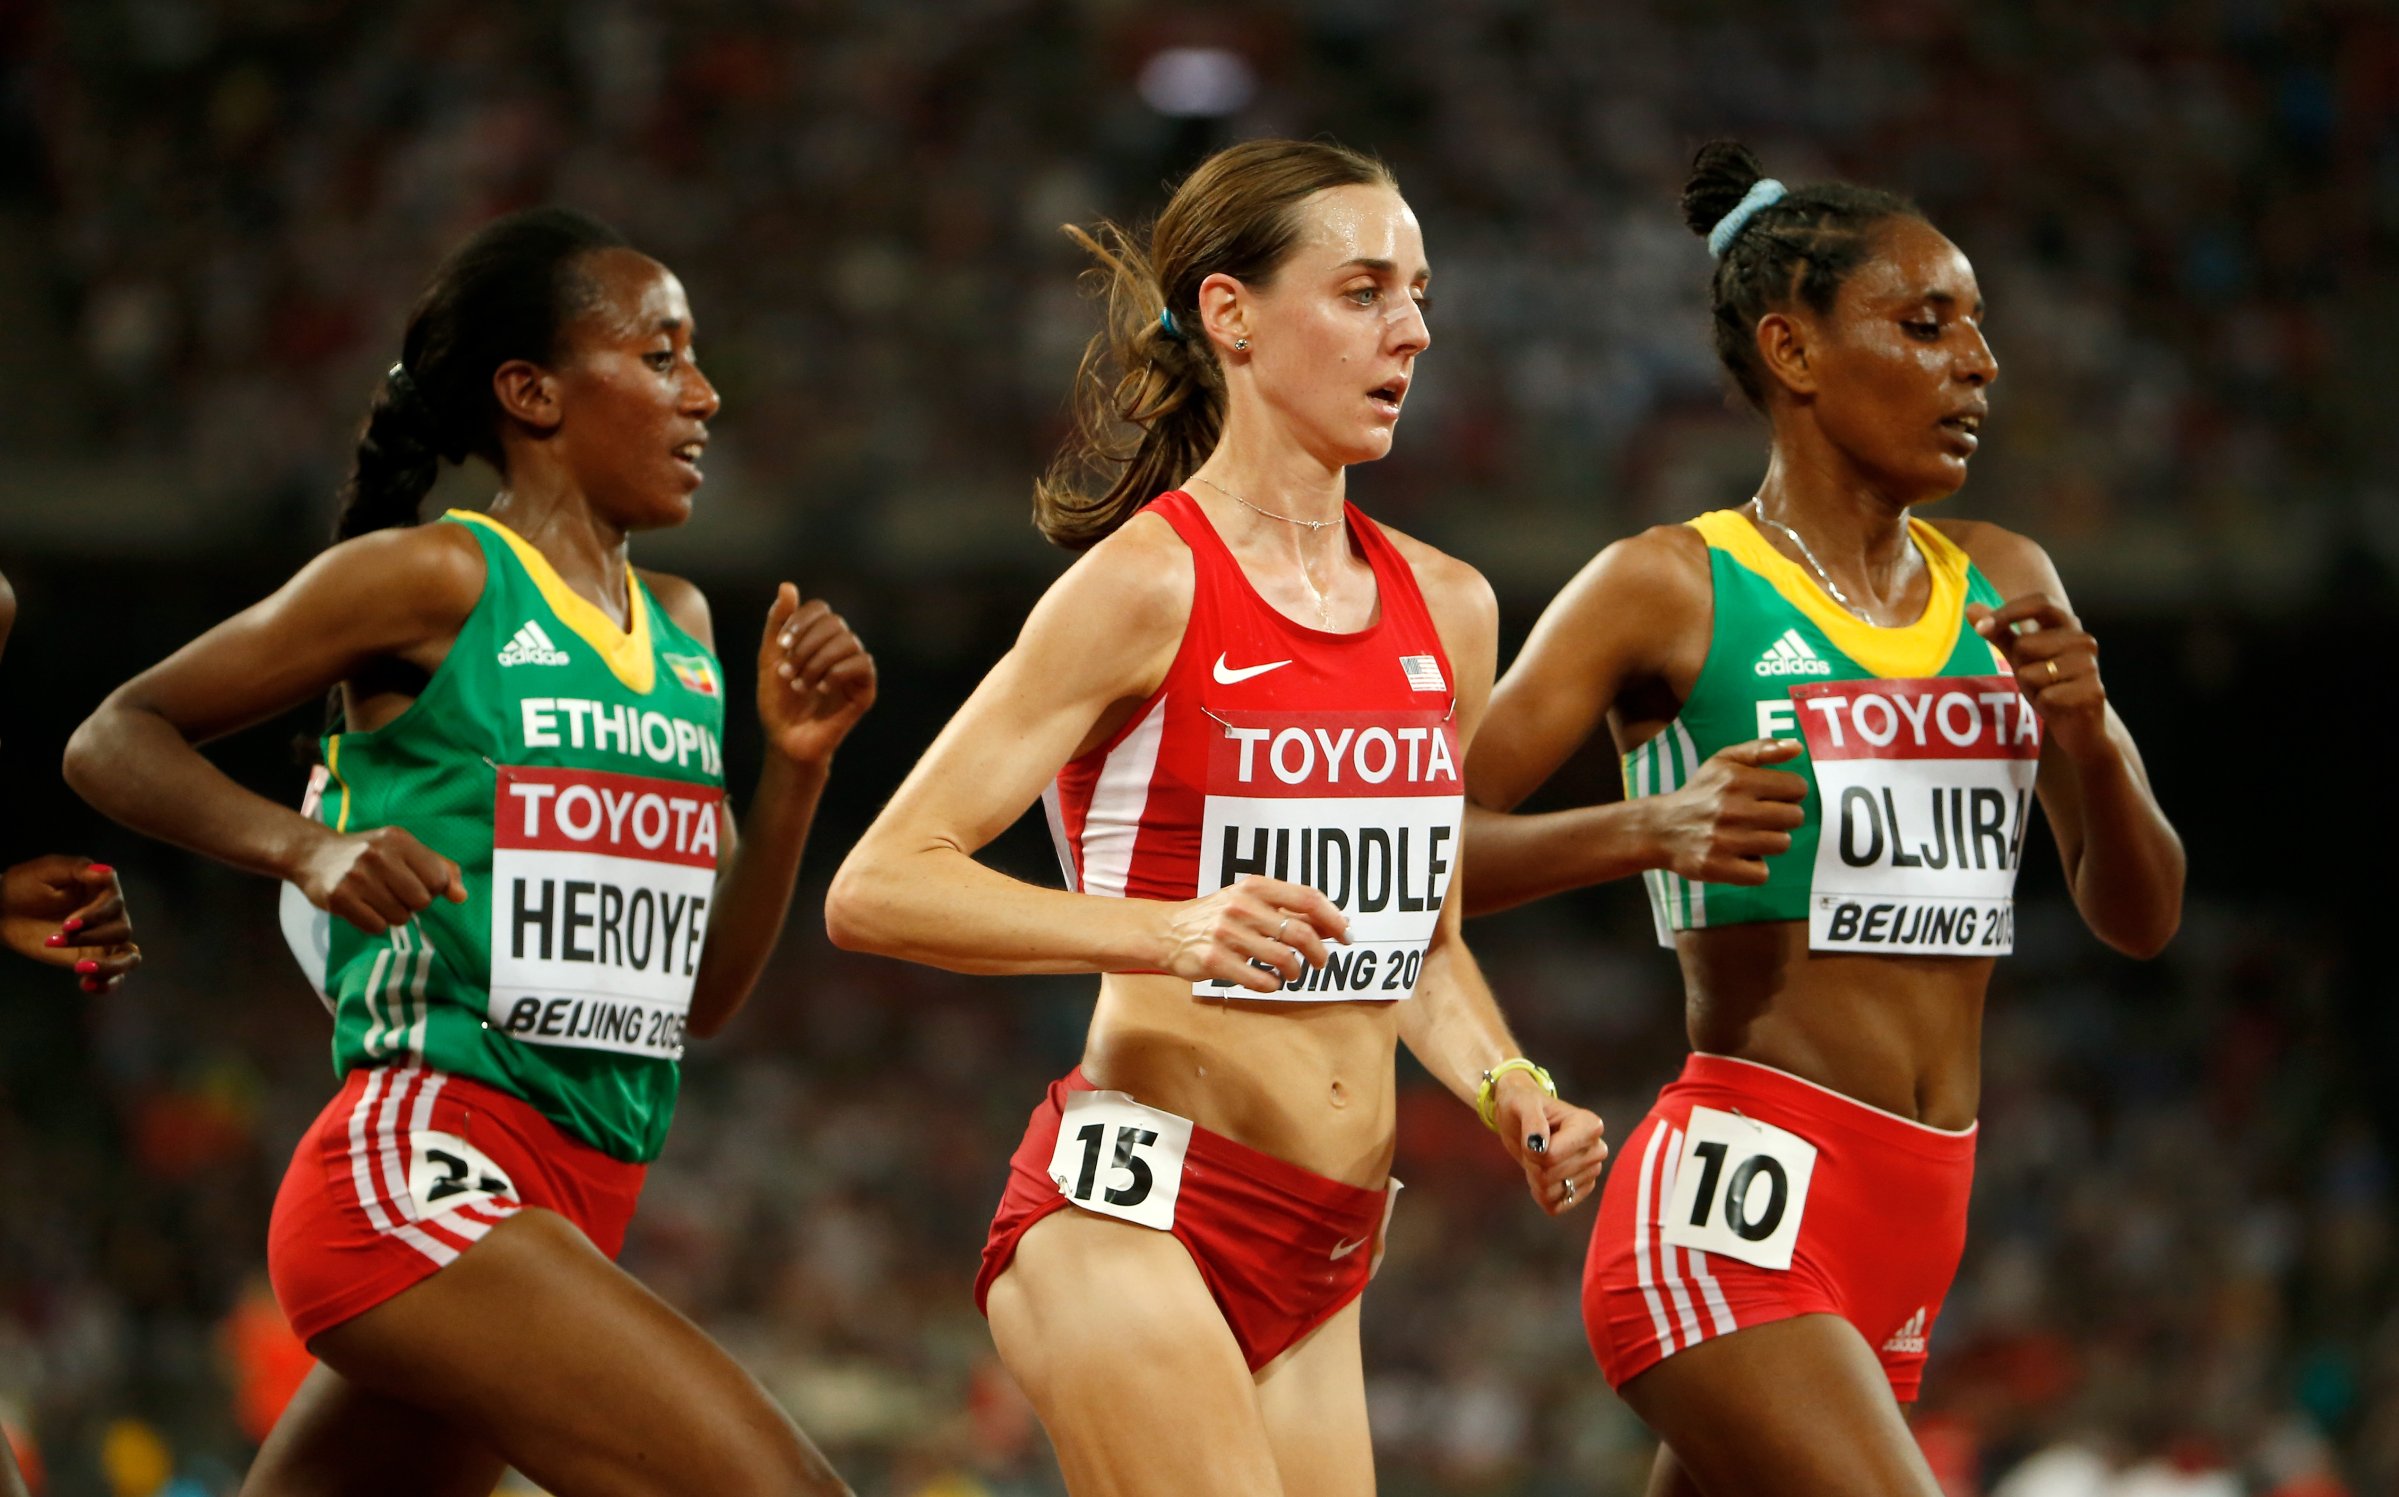 15th IAAF World Athletics Championships Beijing 2015 - Day Three